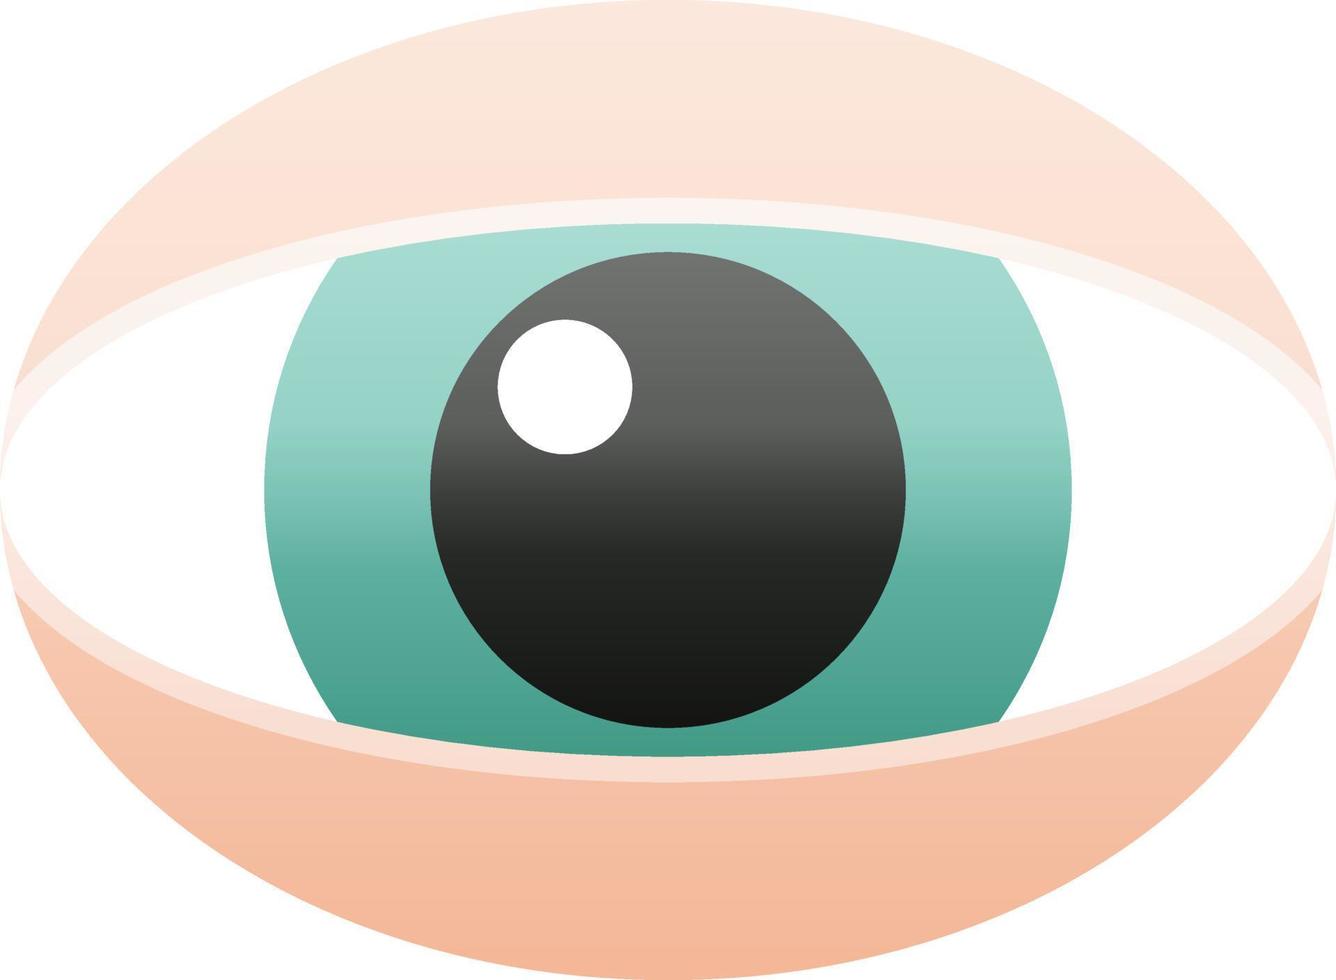 staring eye graphic vector illustration icon